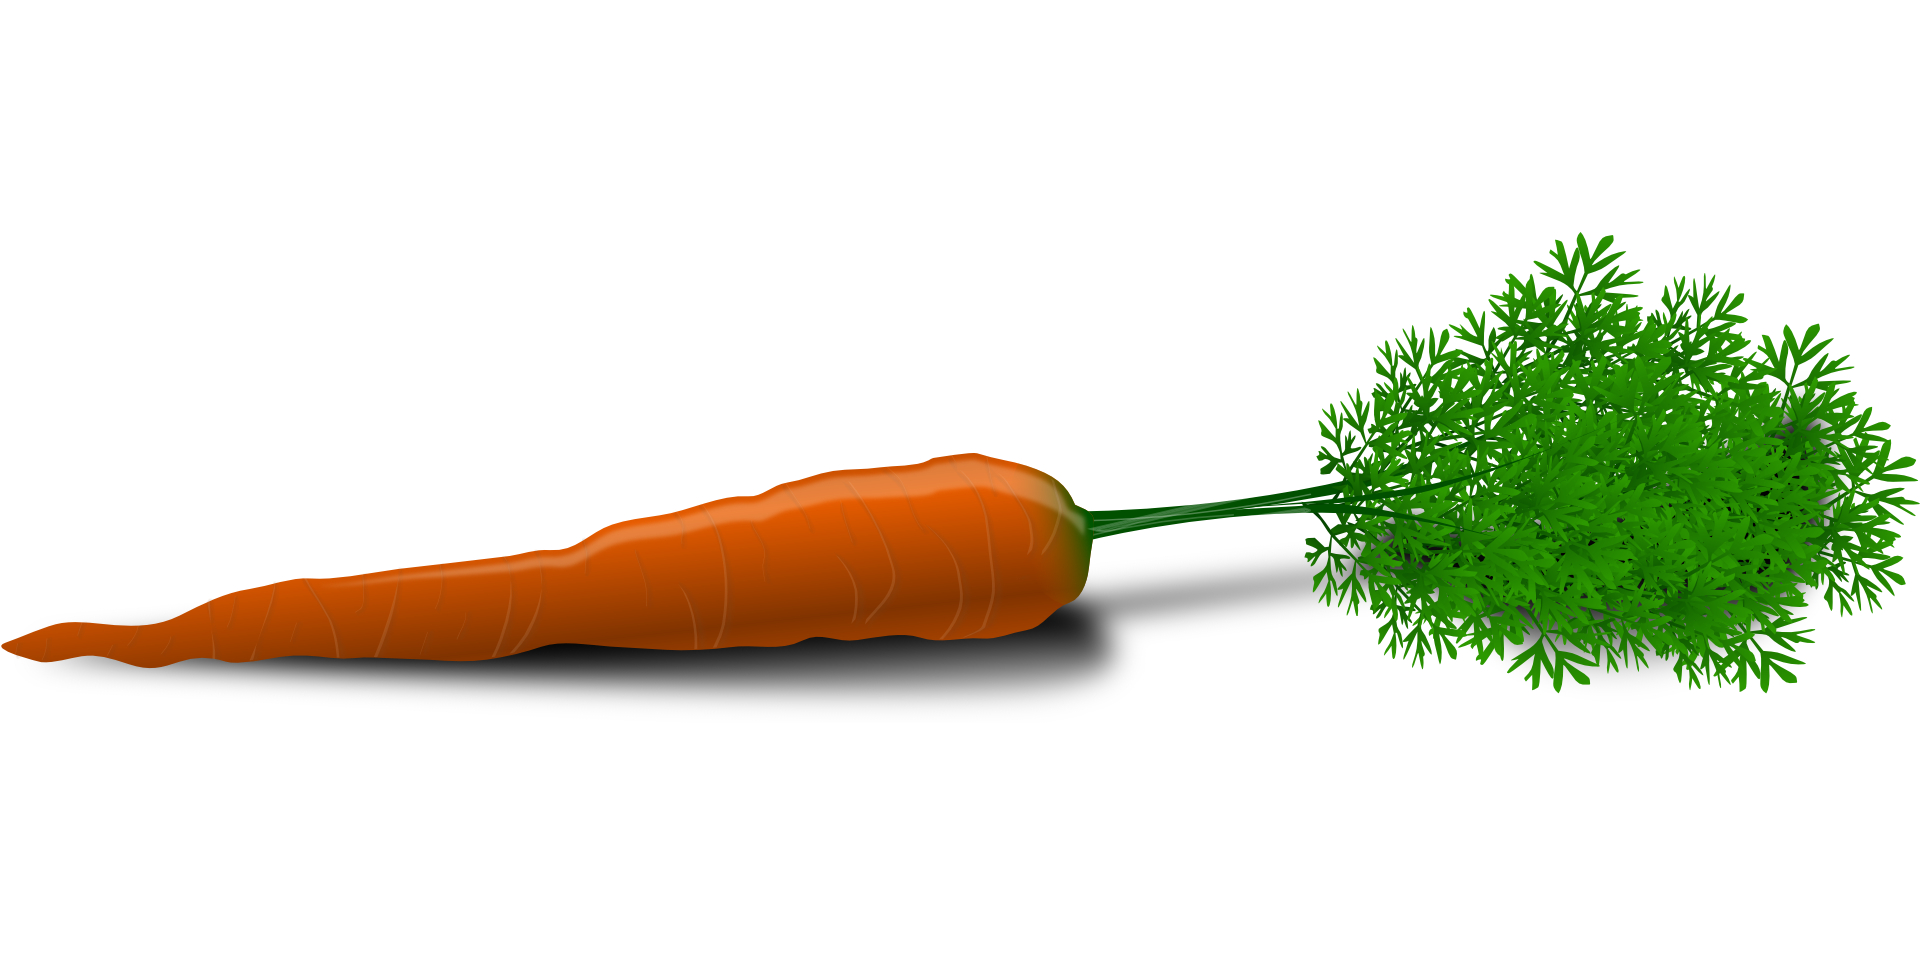 Carrot root,vegetable vector